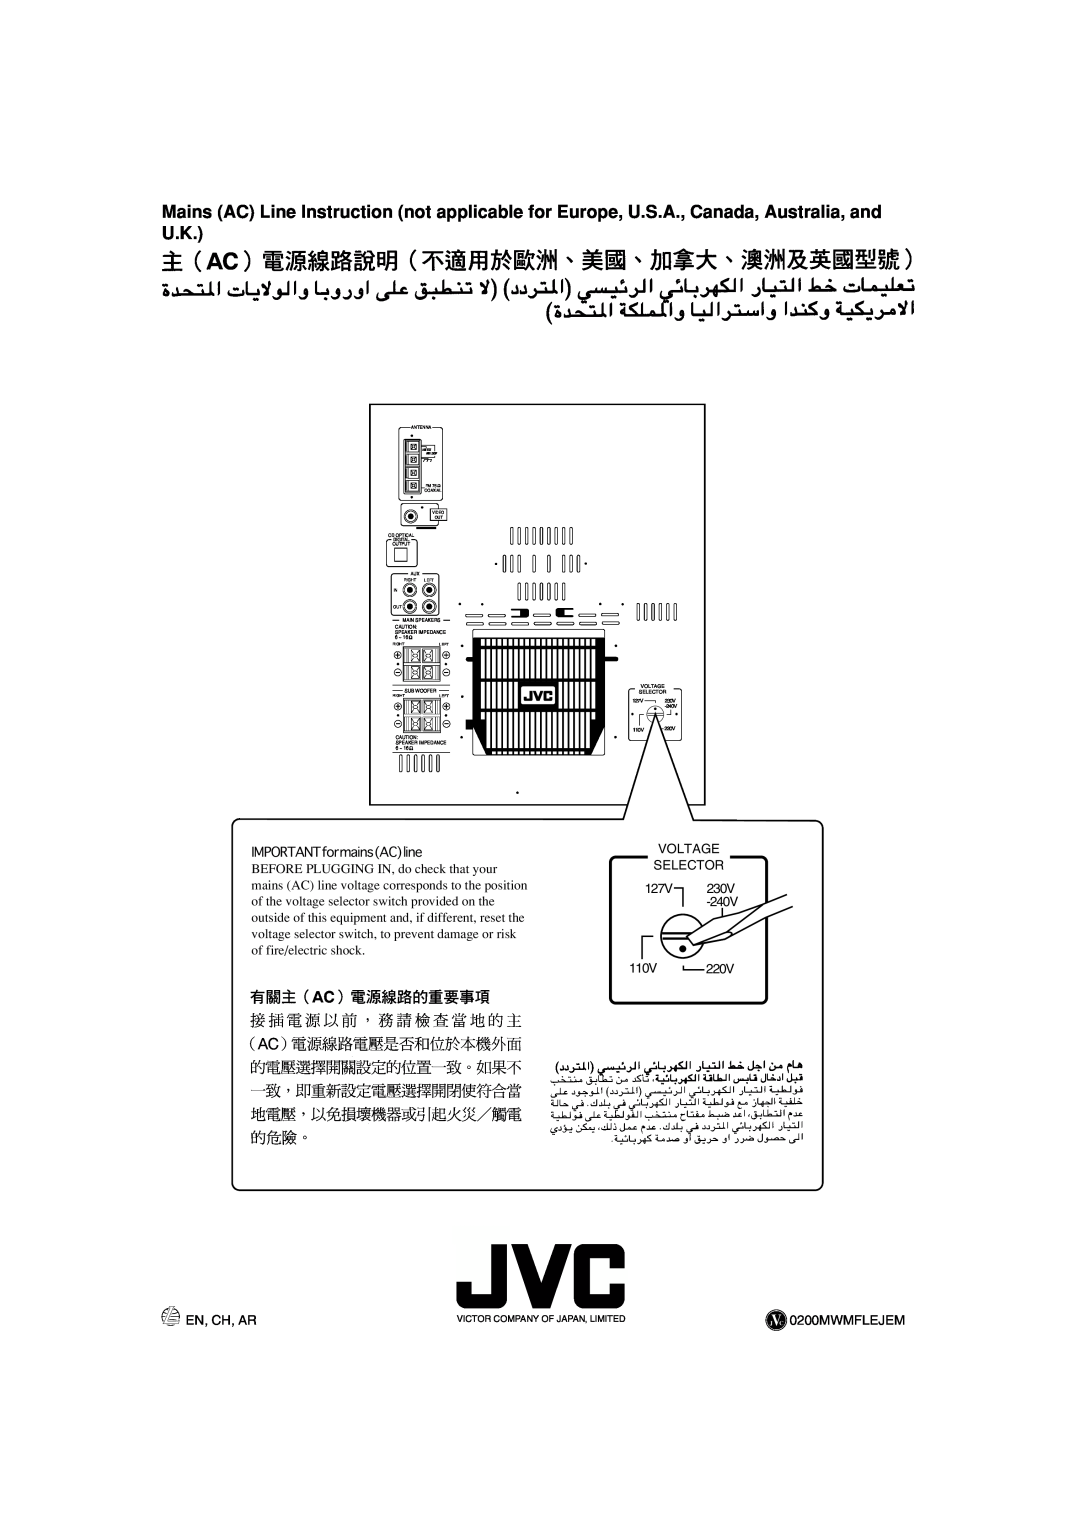 JVC CA-MXJ980V, CA-MXJ970V manual Voltage Selector, 110V, En, Ch, Ar, JVC 0200MWMFLEJEM 